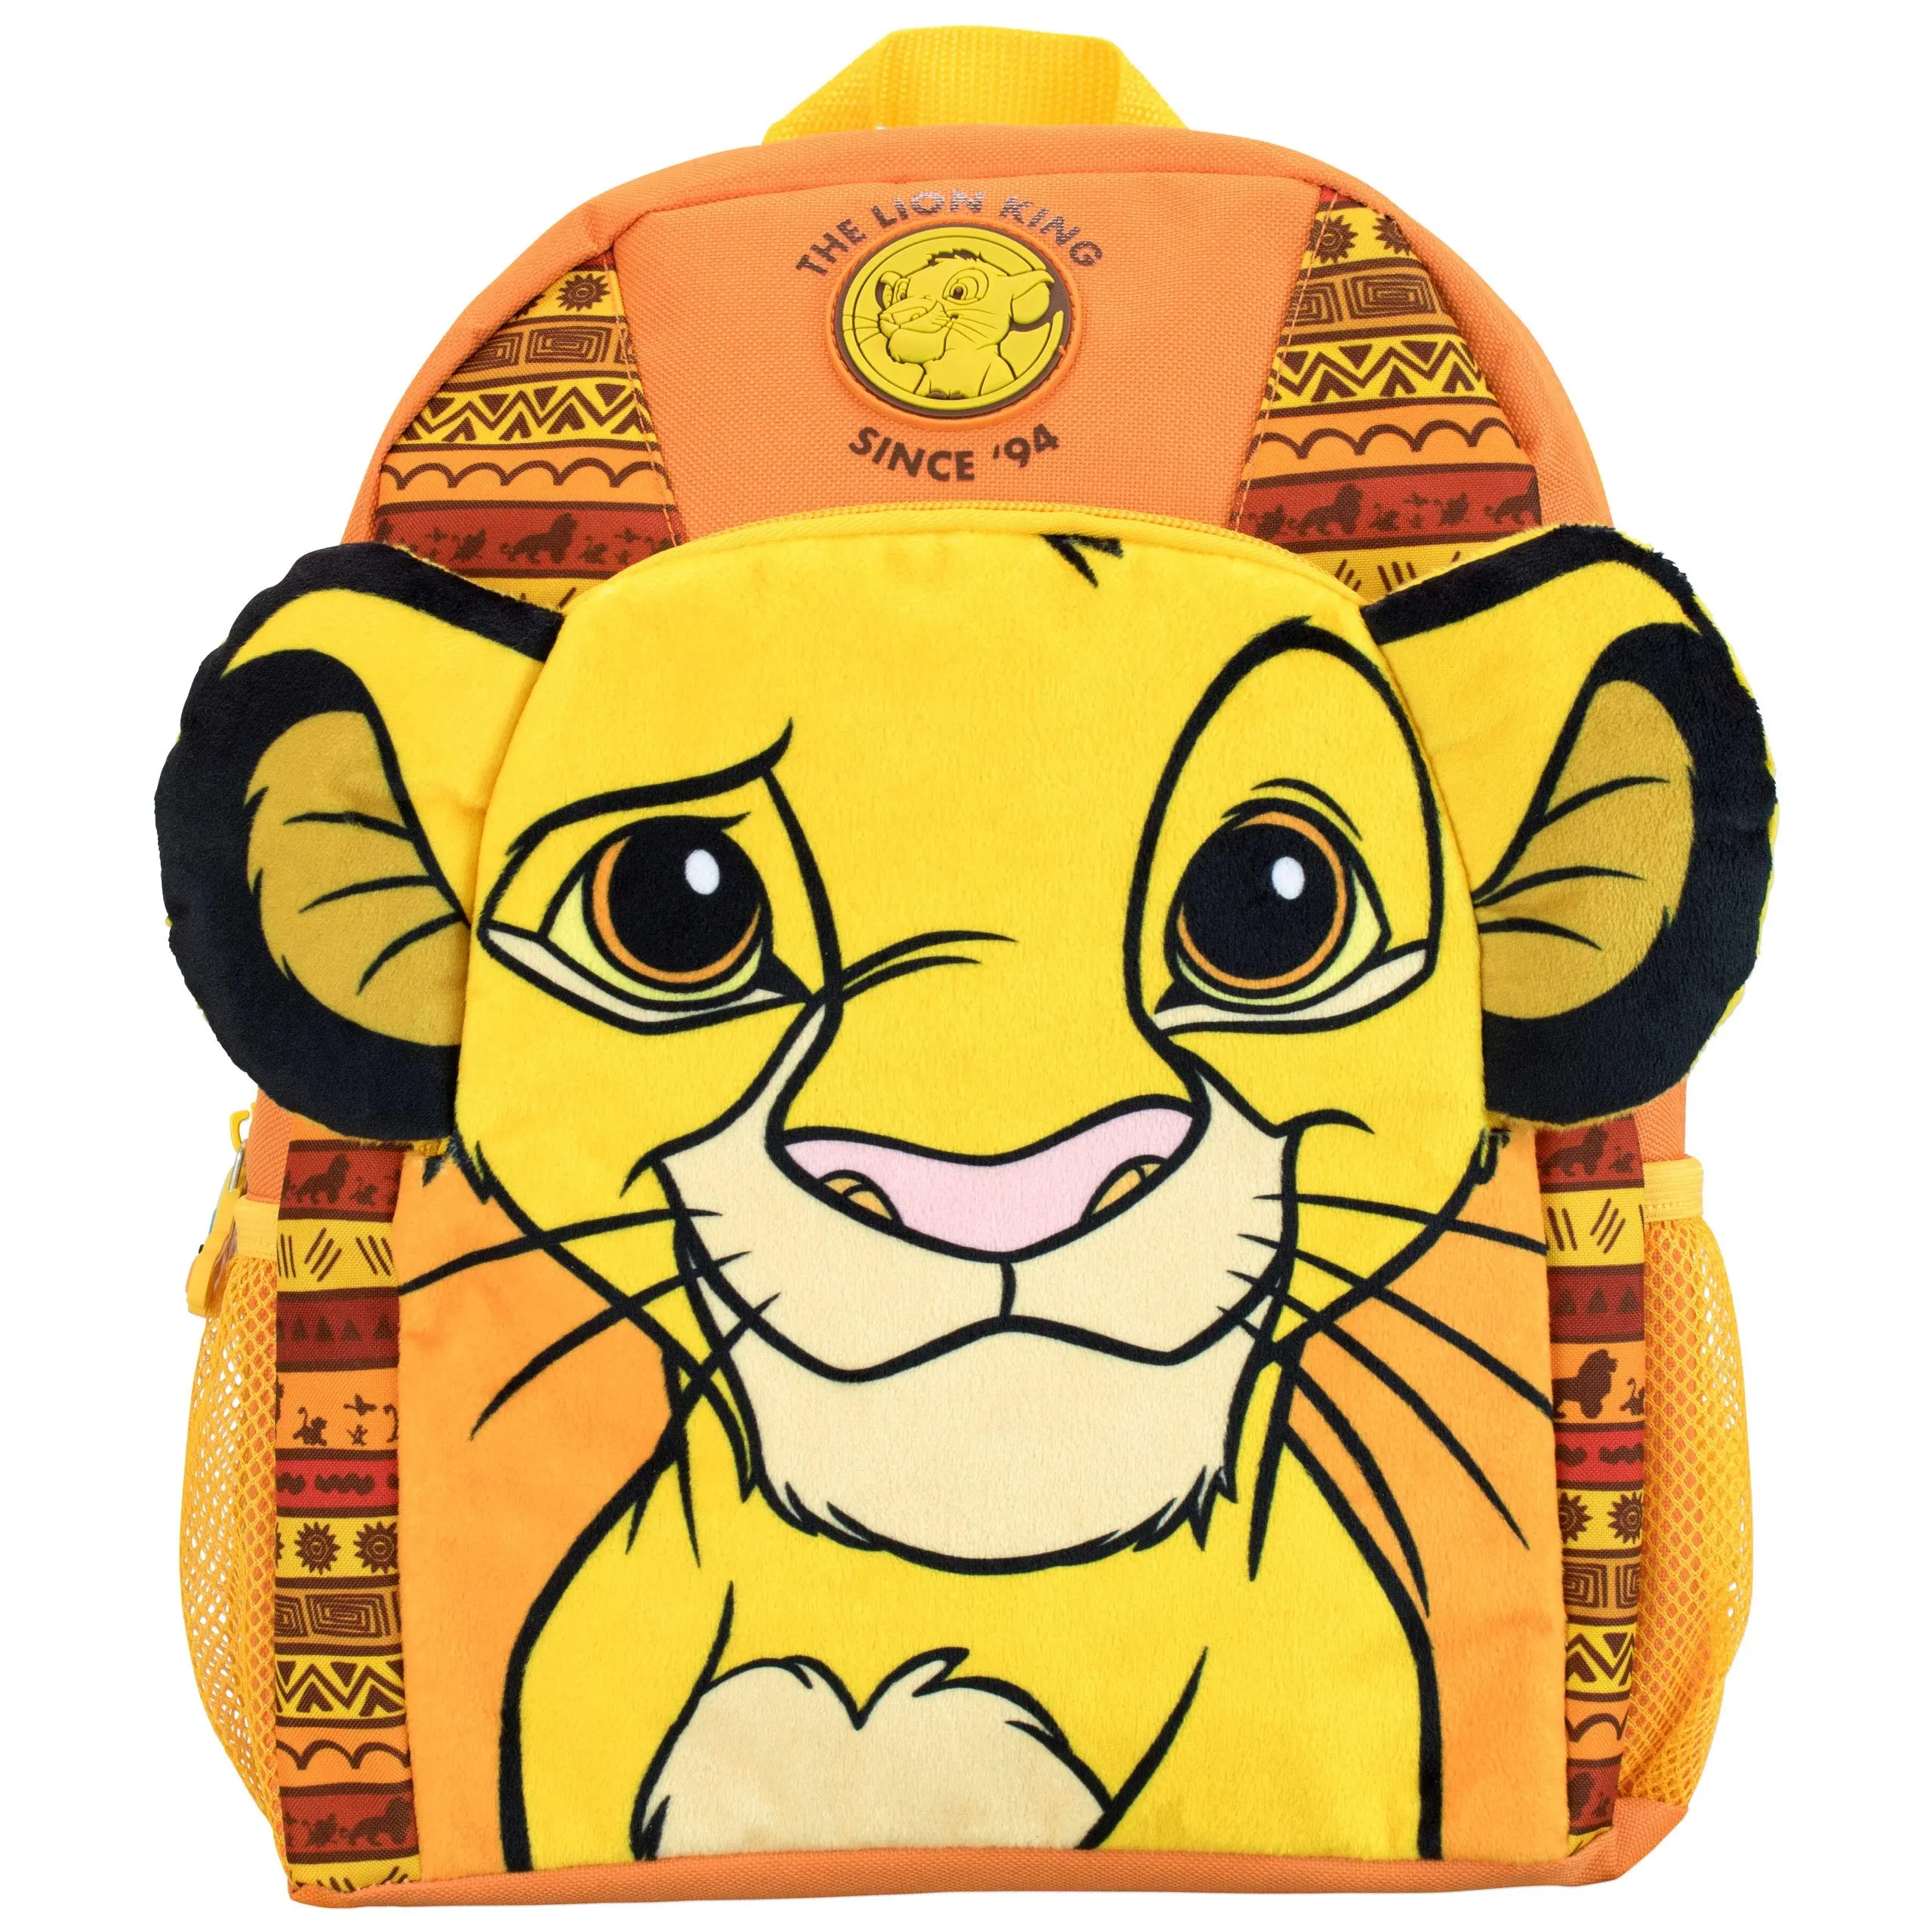 DISNEY FAMA SEDEX BSCI AUDIT OEM Bags Factory KIDS Backpack School Bags Children's Cartoon Schoolbag Kindergarten Schoolbag